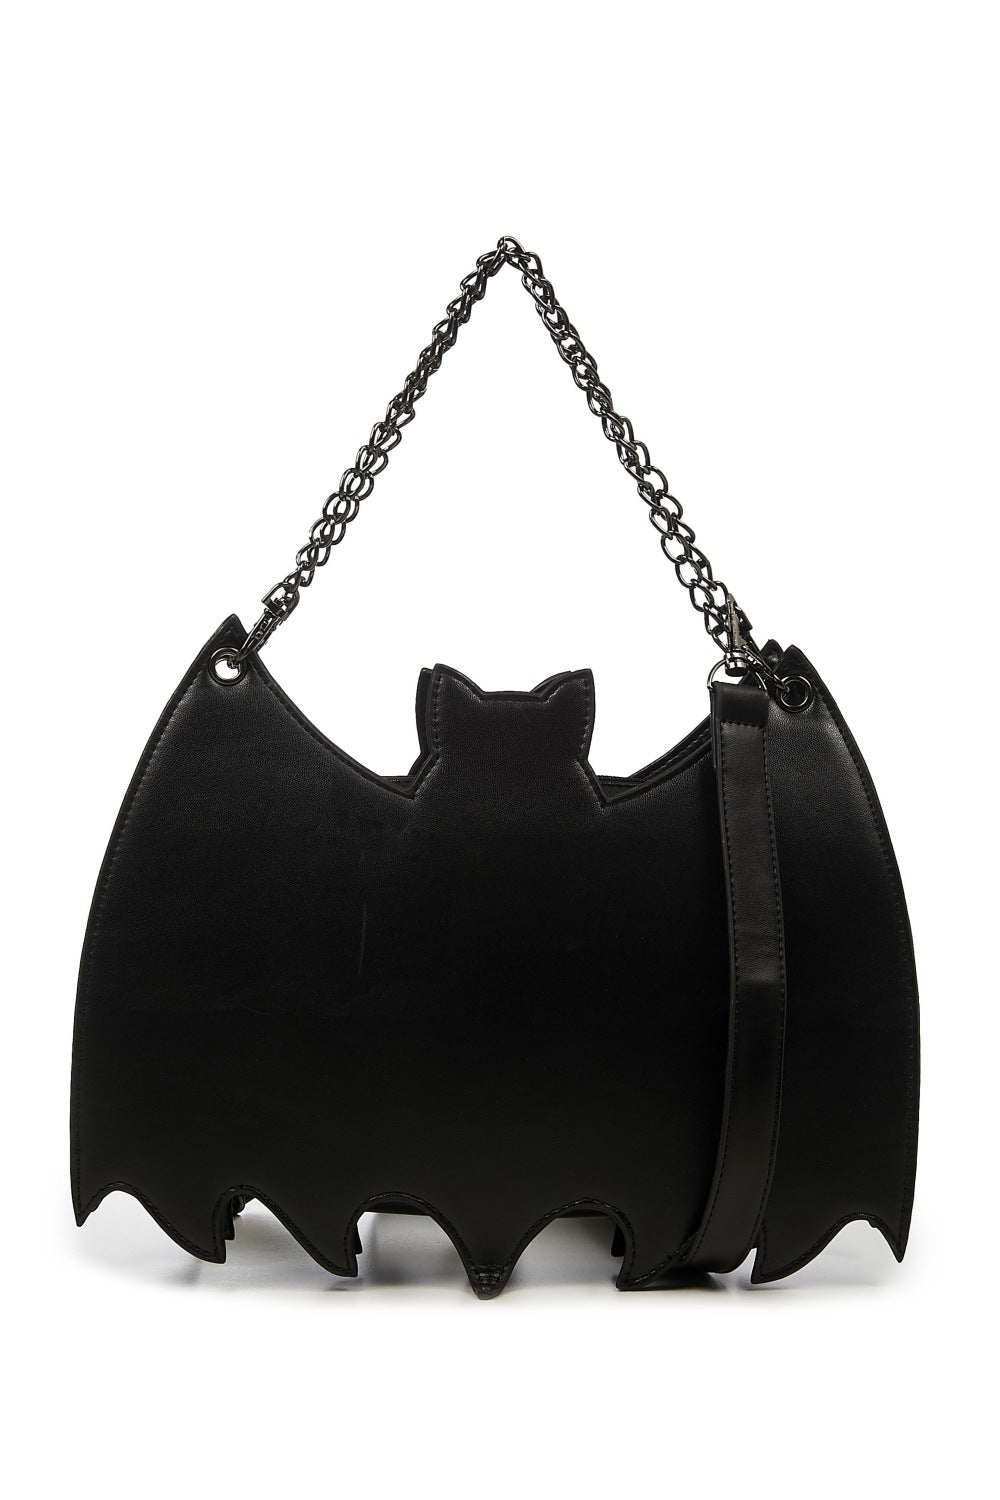 Bat shaped backpack in black